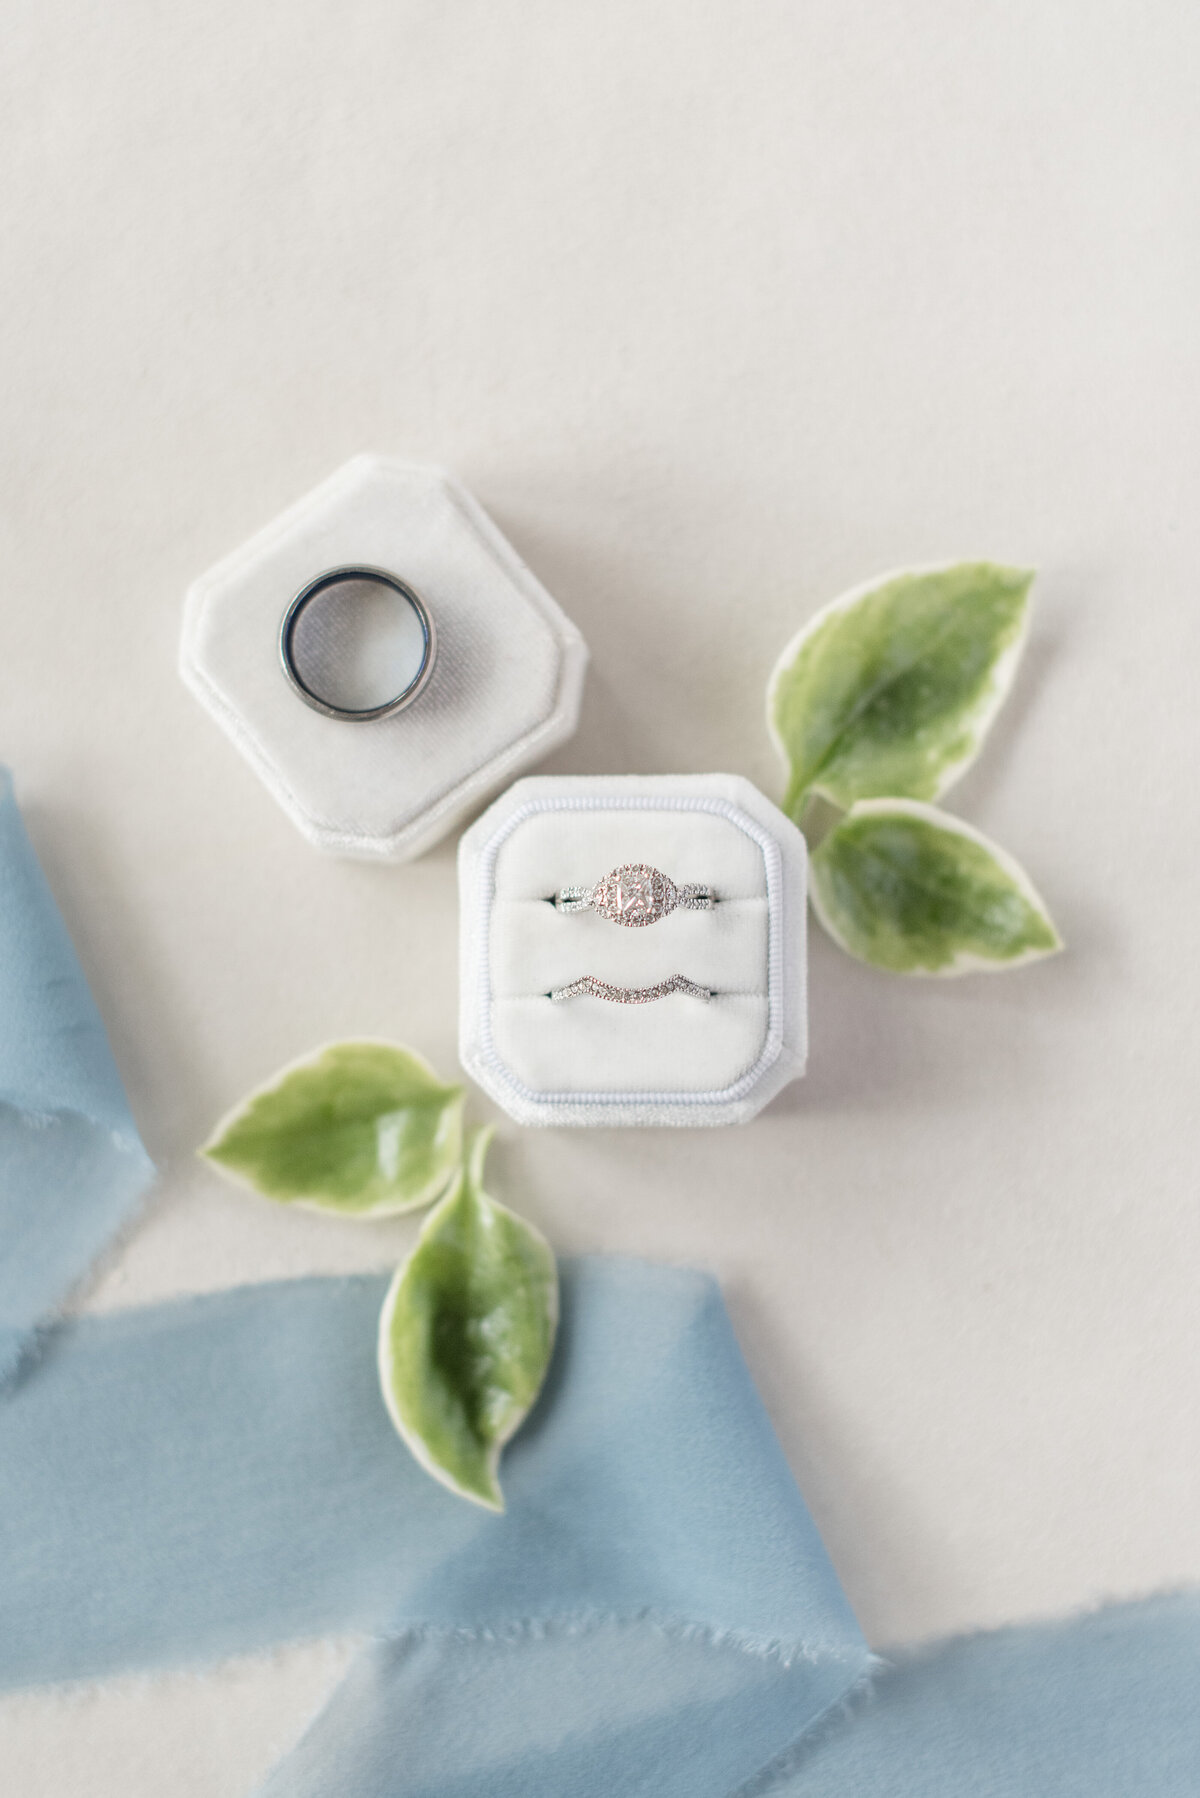 Diamond wedding rings inside white box with dark gray wedding band resting on box lid.